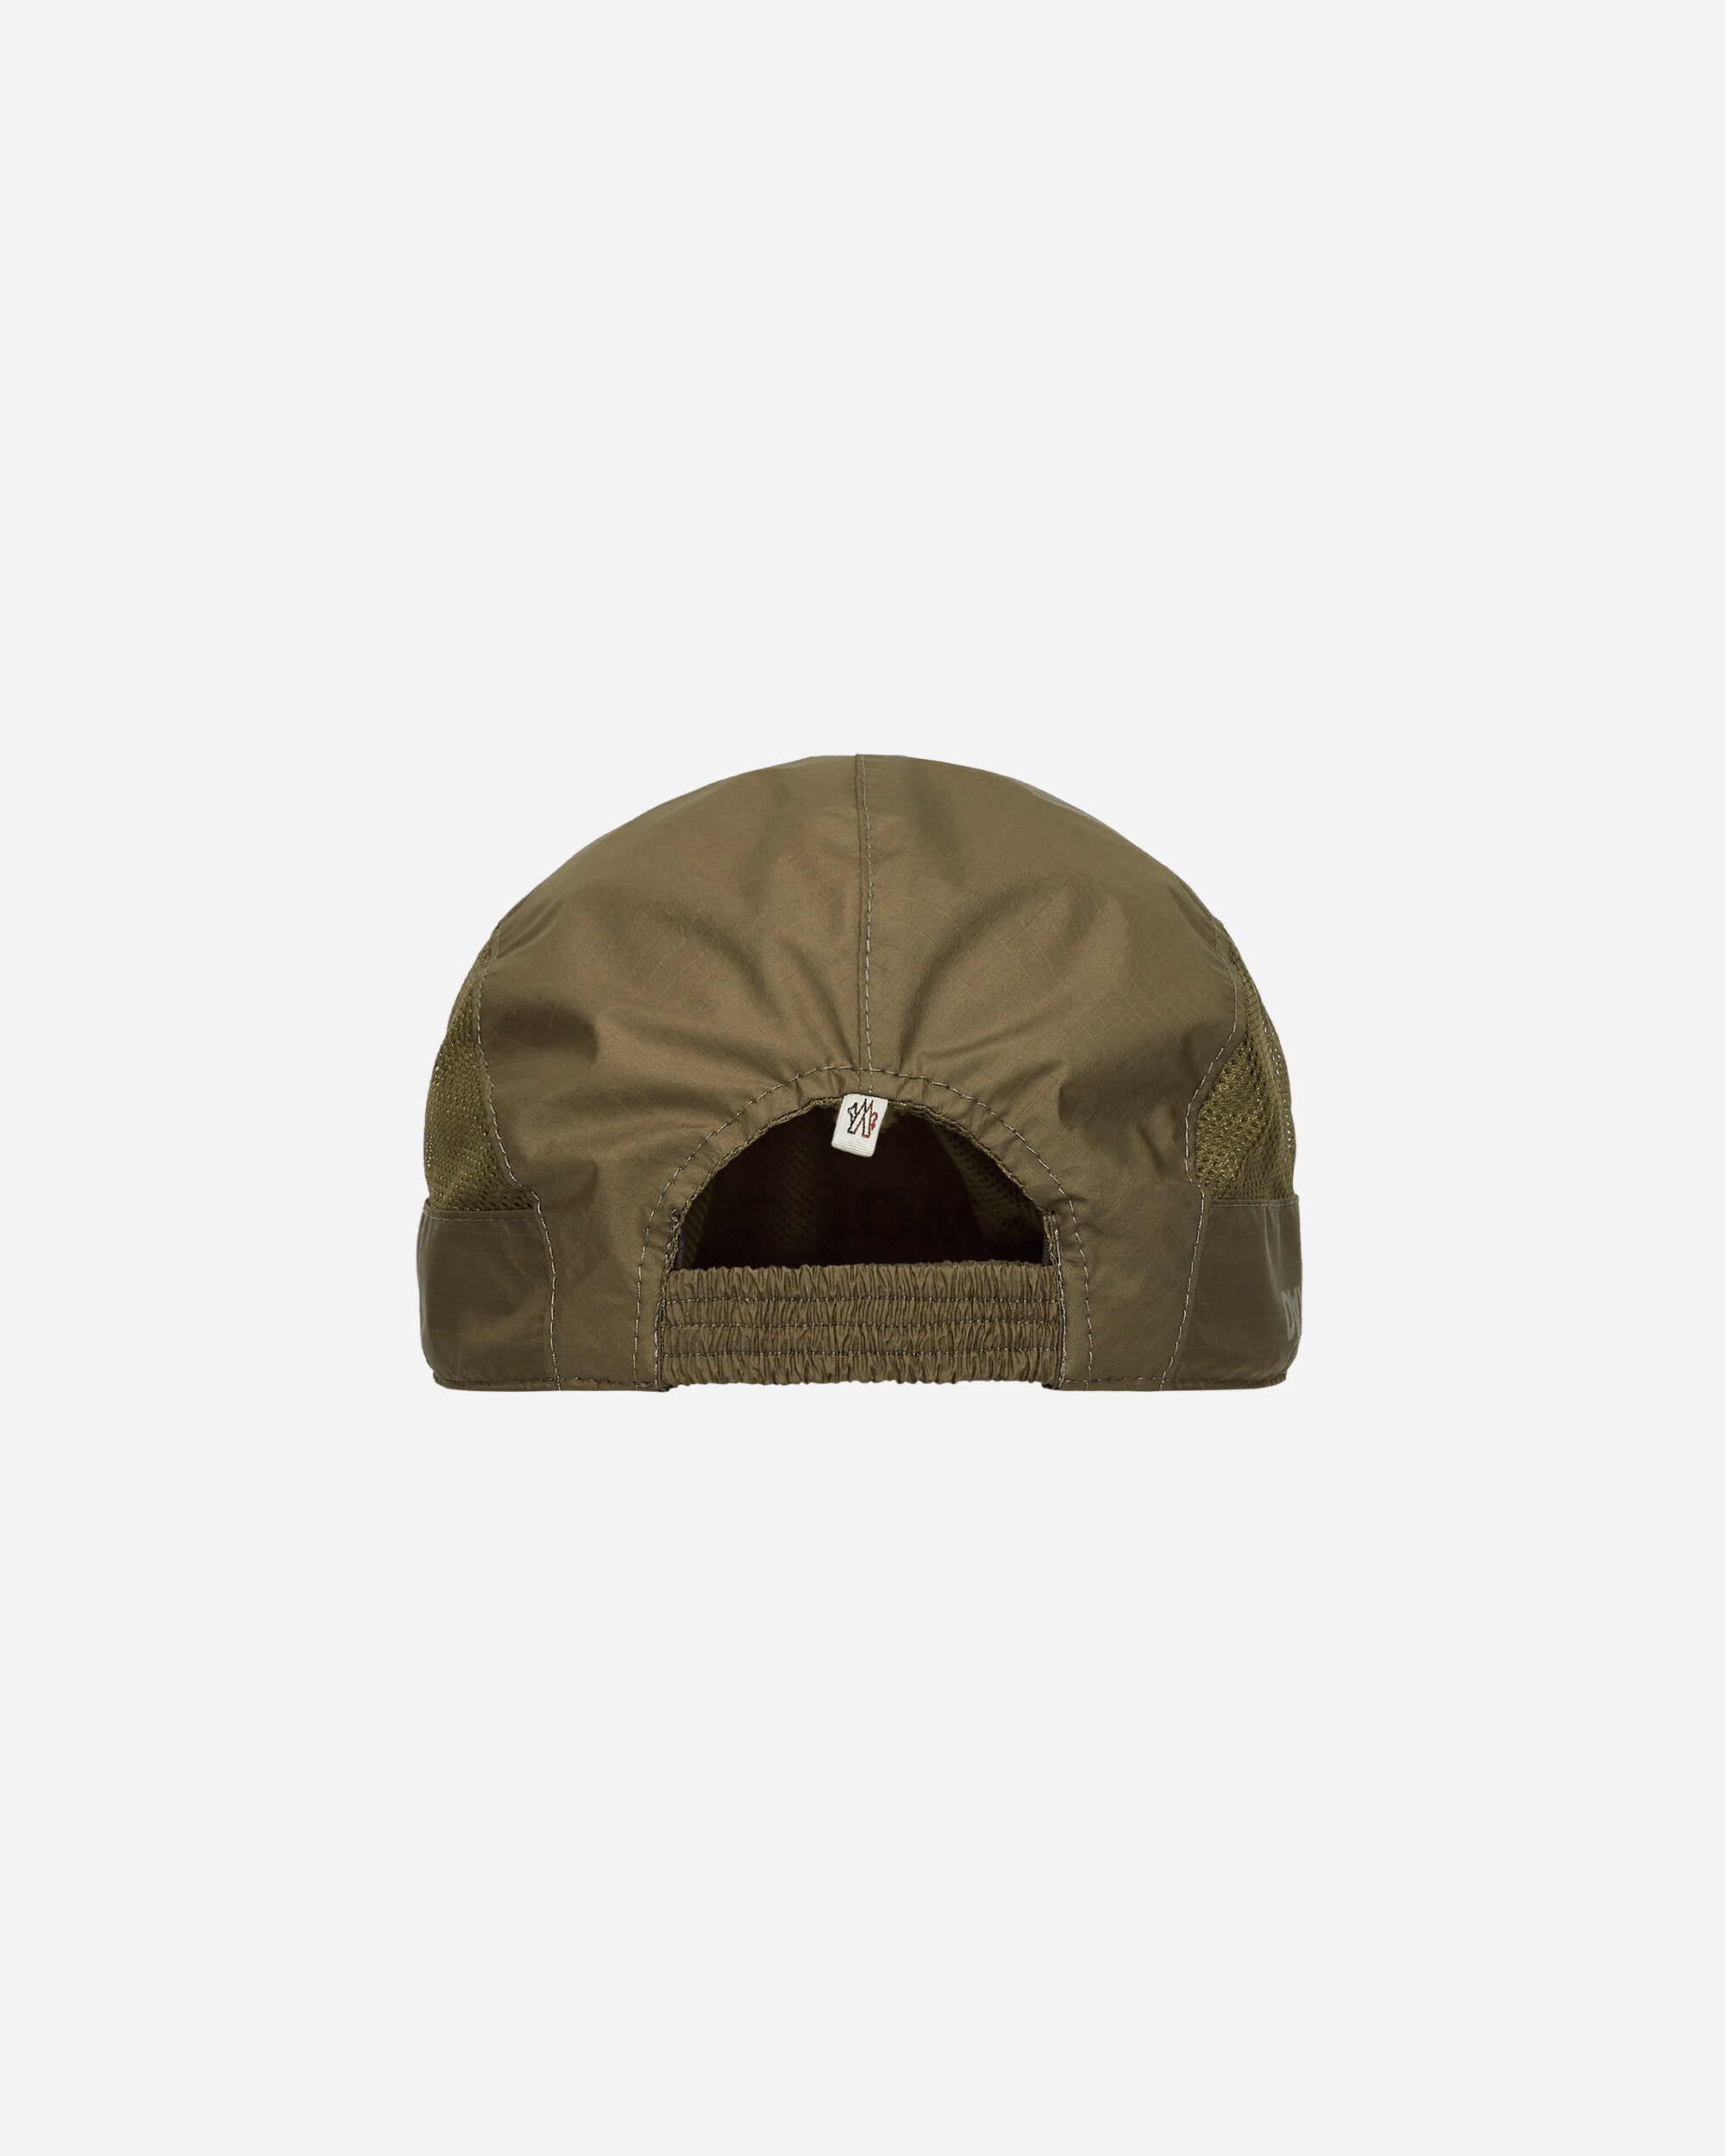 Moncler Grenoble Baseball Cap Khaki Hats Caps 3B0000554A7Q 891